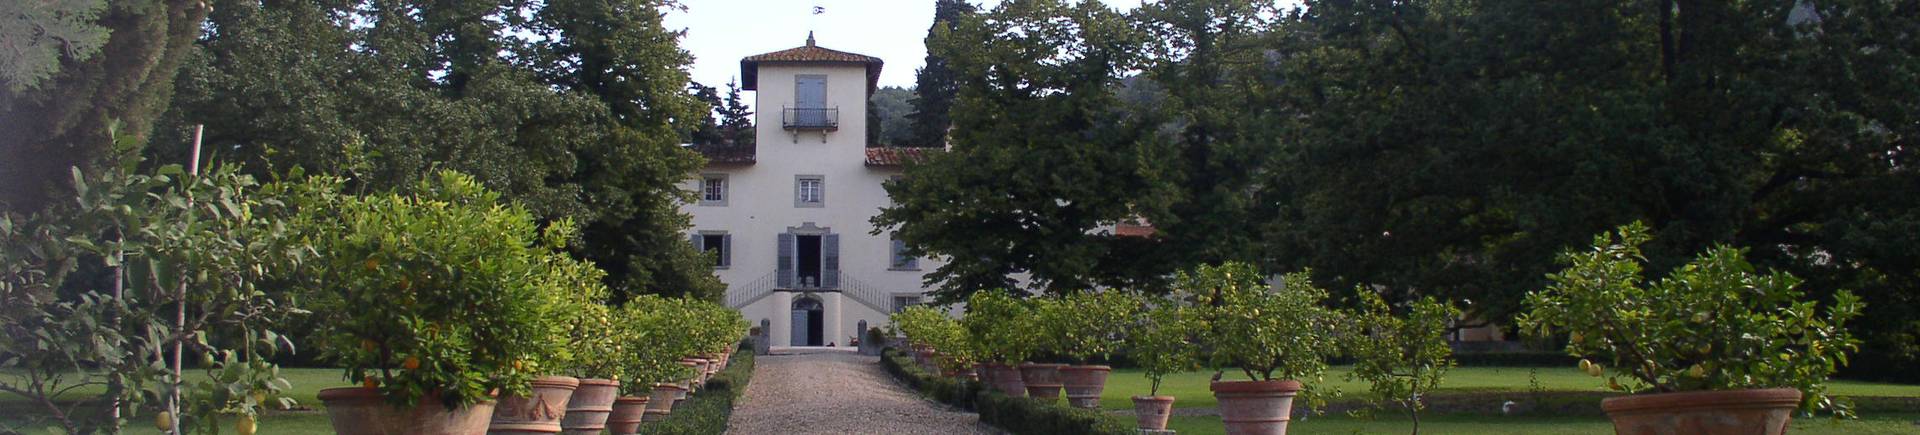 Villa Strozzi Montemurlo